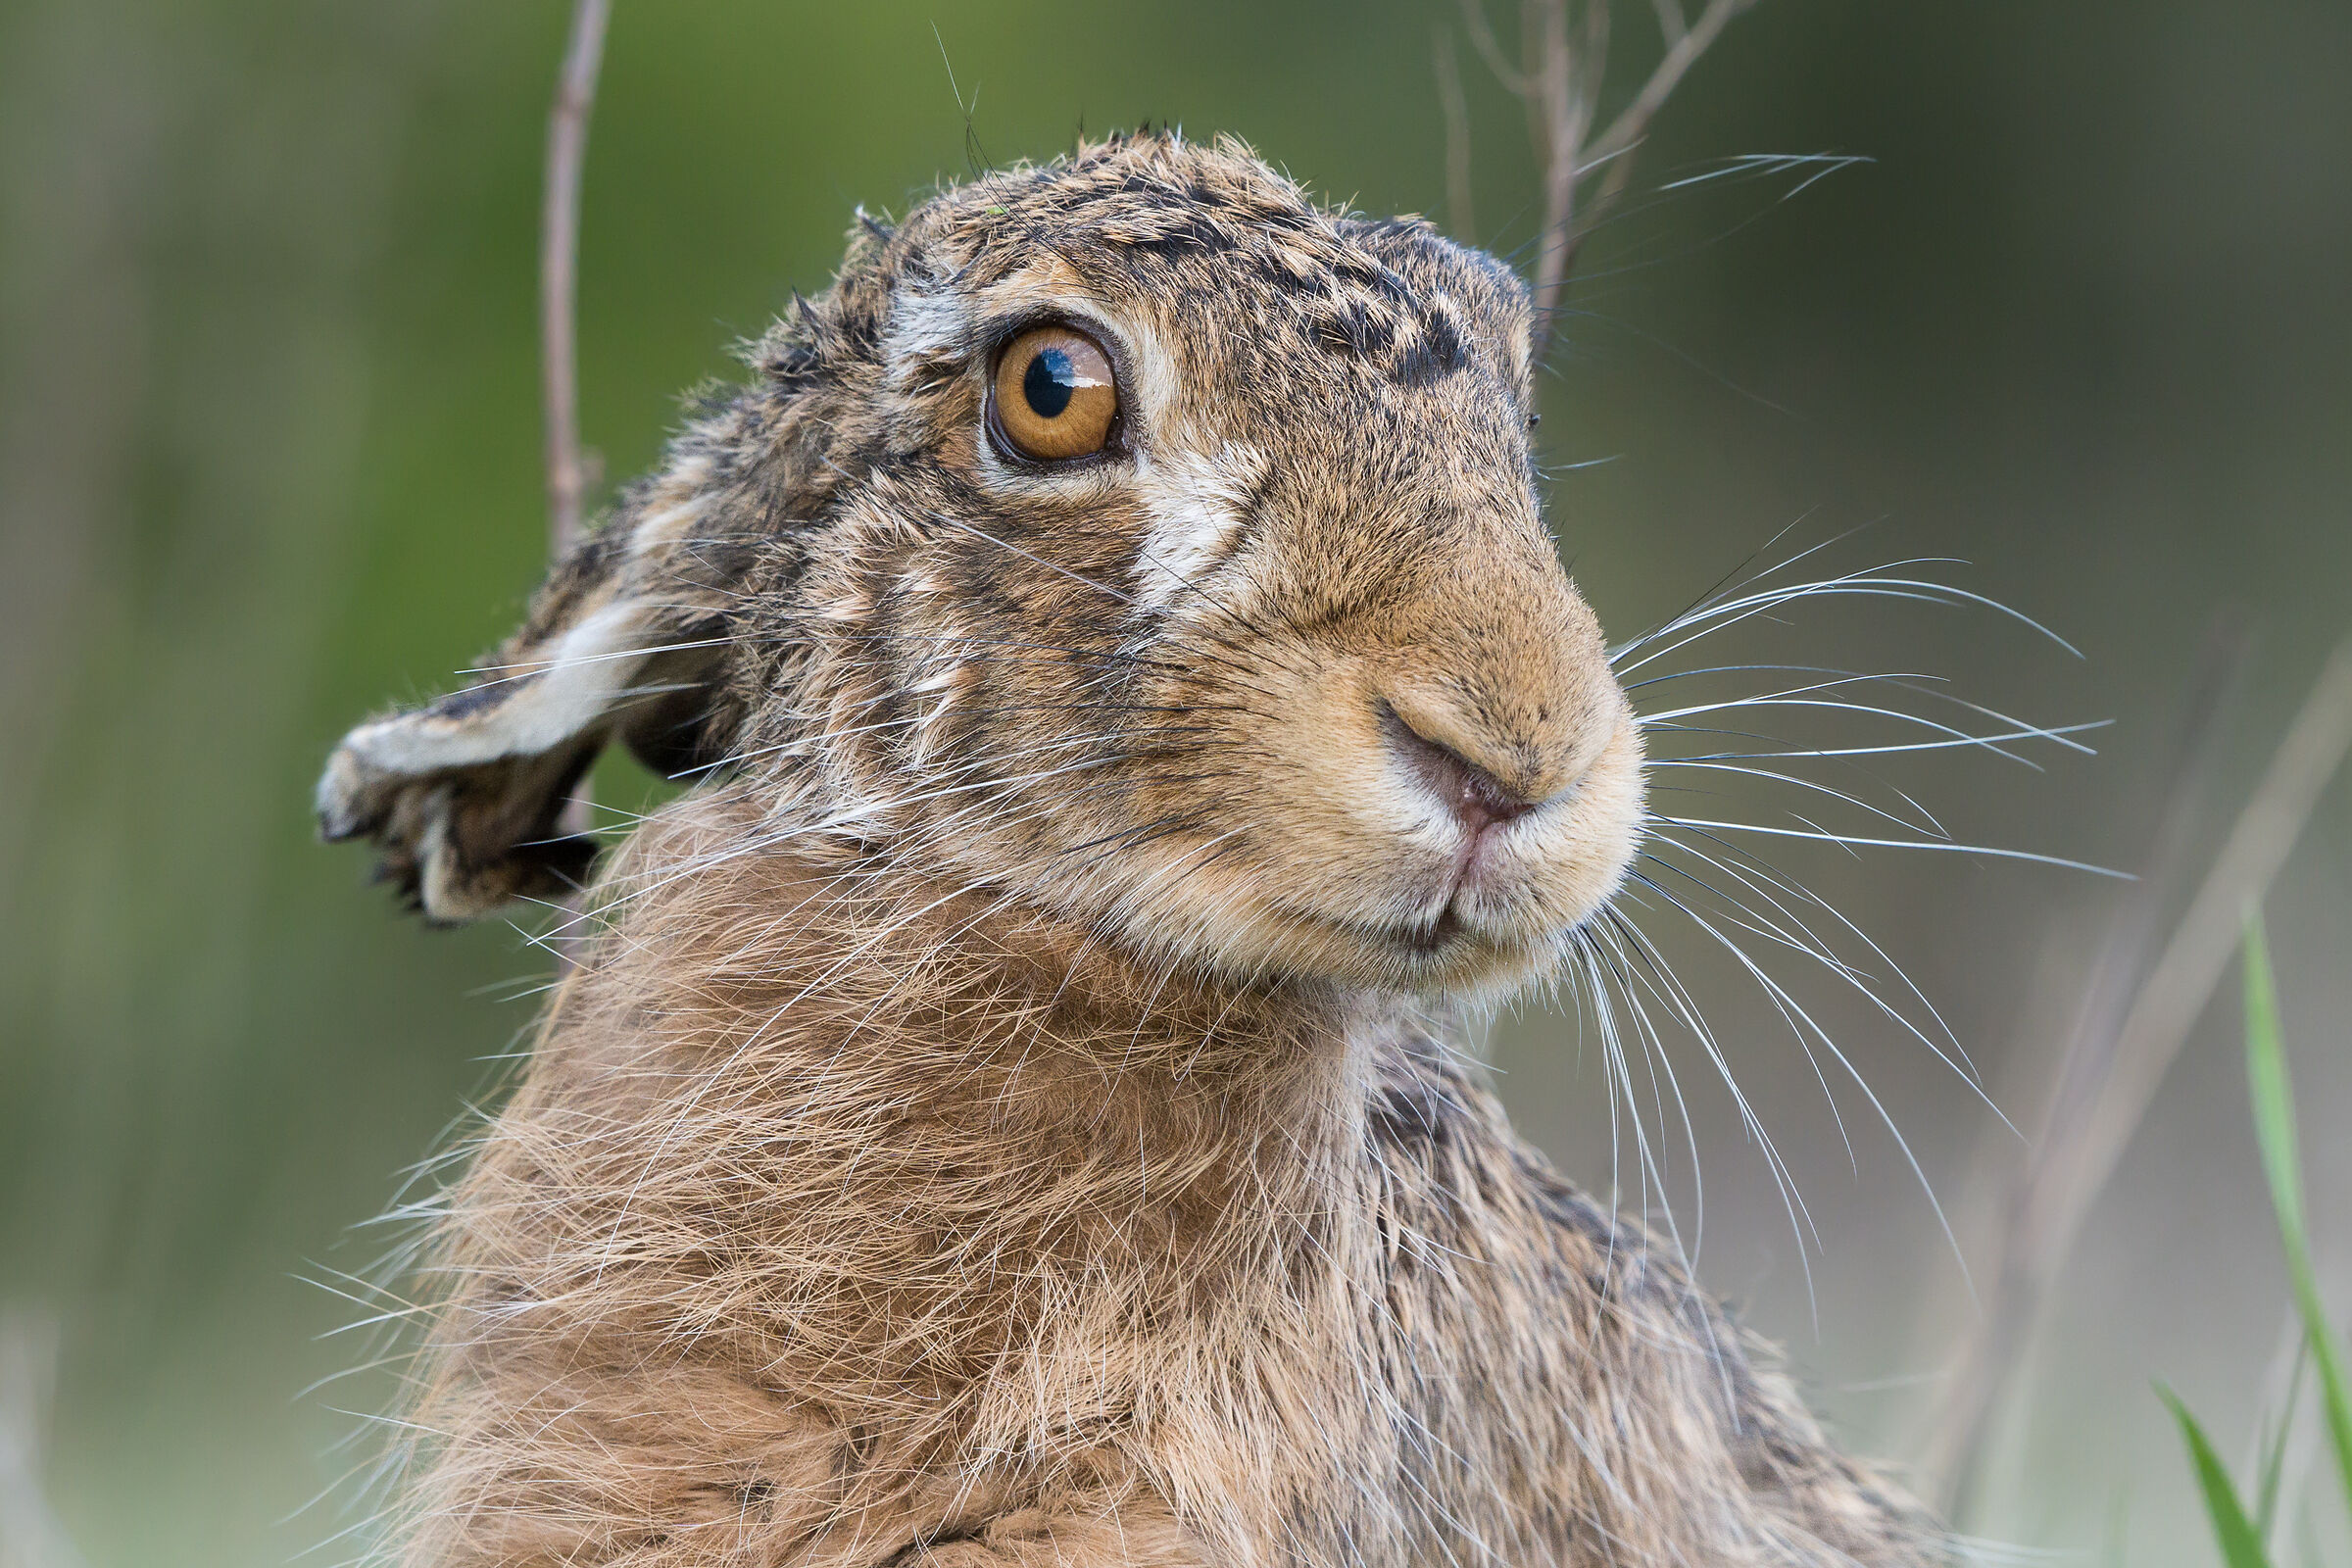 Brown hare (Lepus europaeus)...